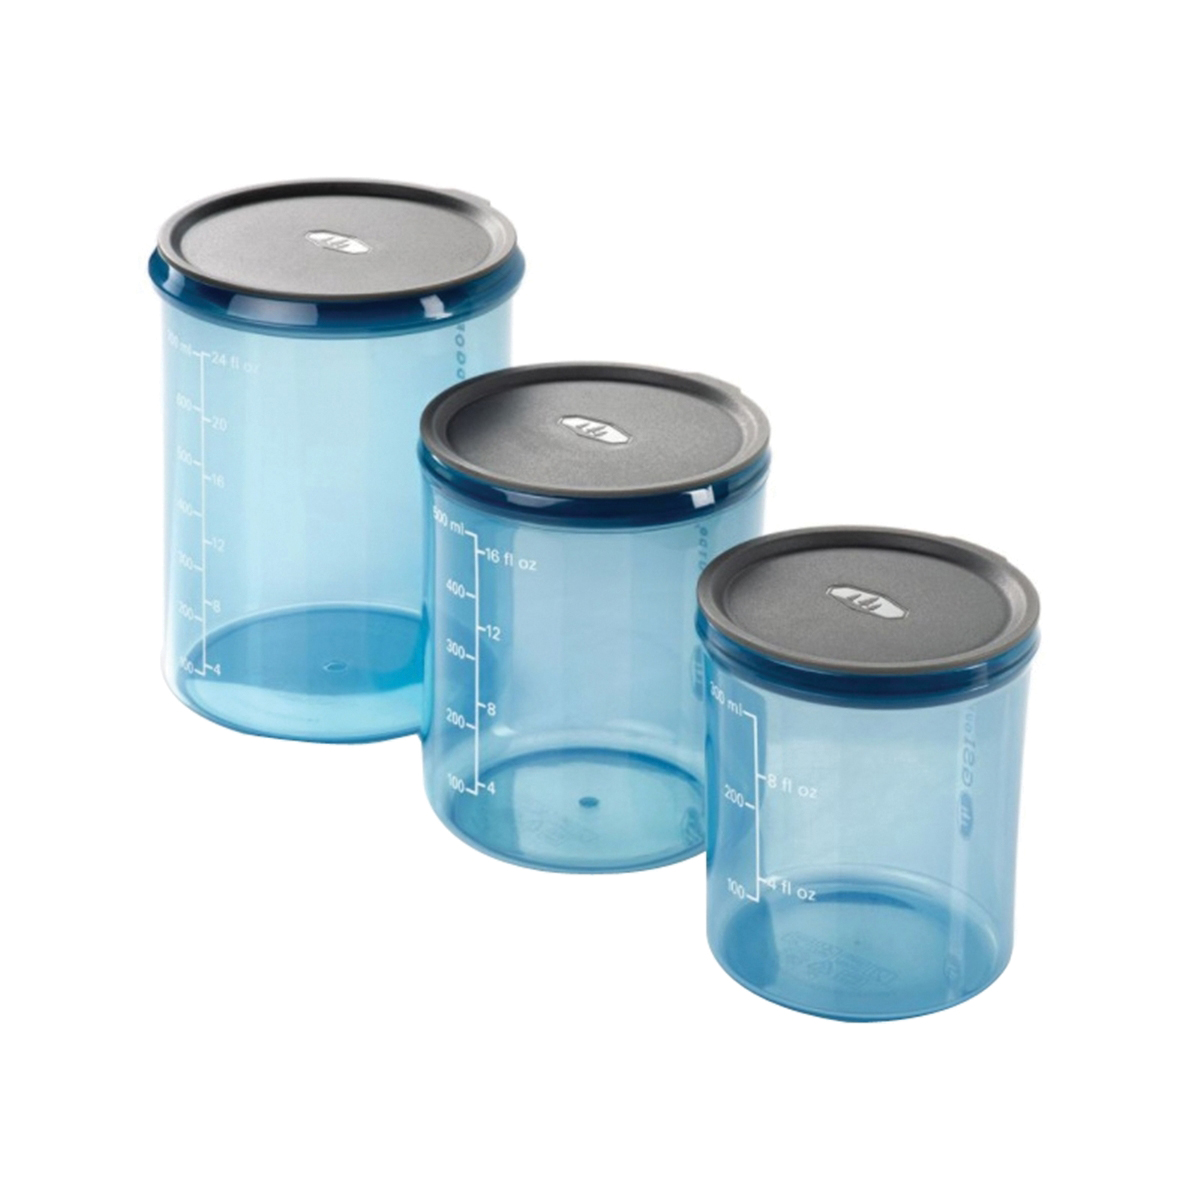 Hydro Flask 20 Oz Peppercorn Insulated Food Jar - RF20034